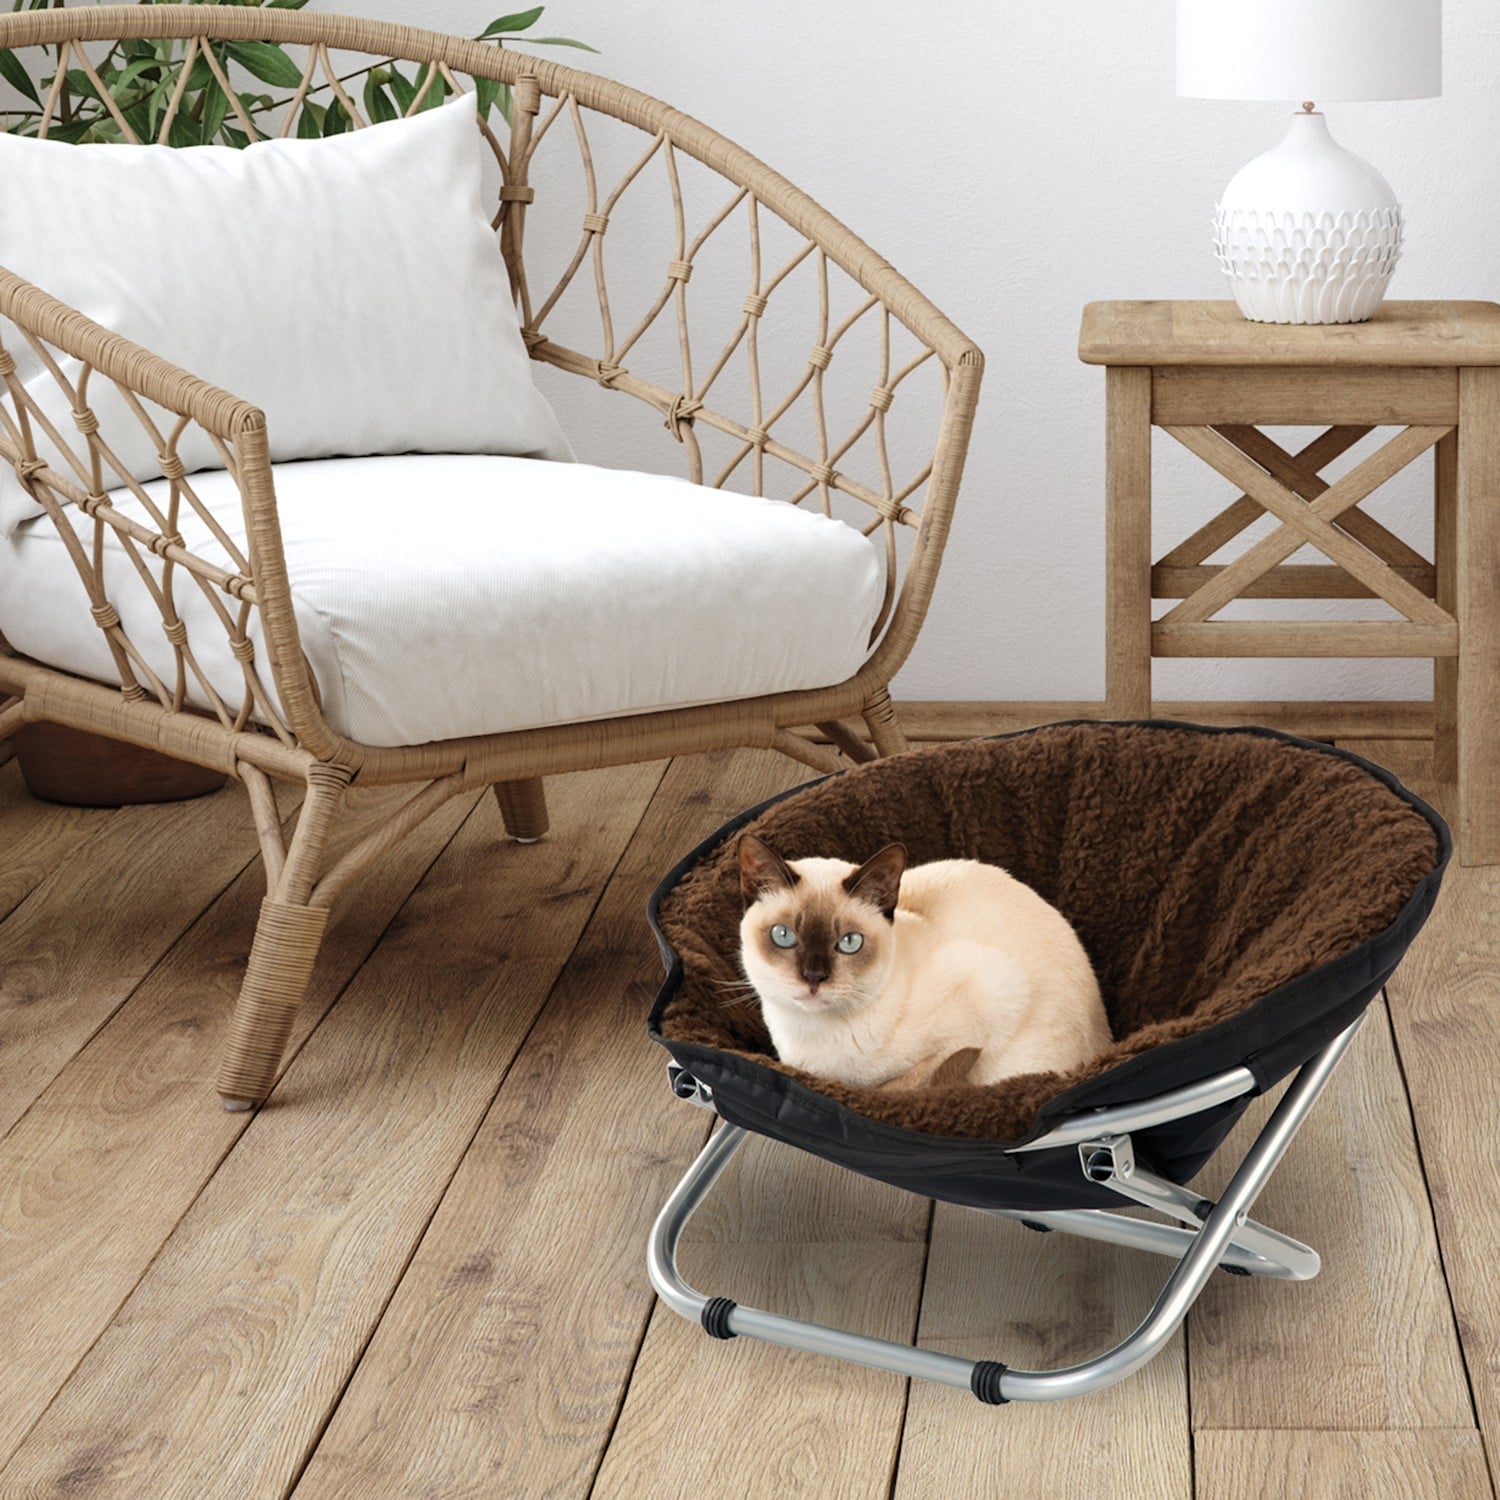 Folding Pet Cot Chair - Cat Bed, Brown Fleece Top Papasan Chair for Sm